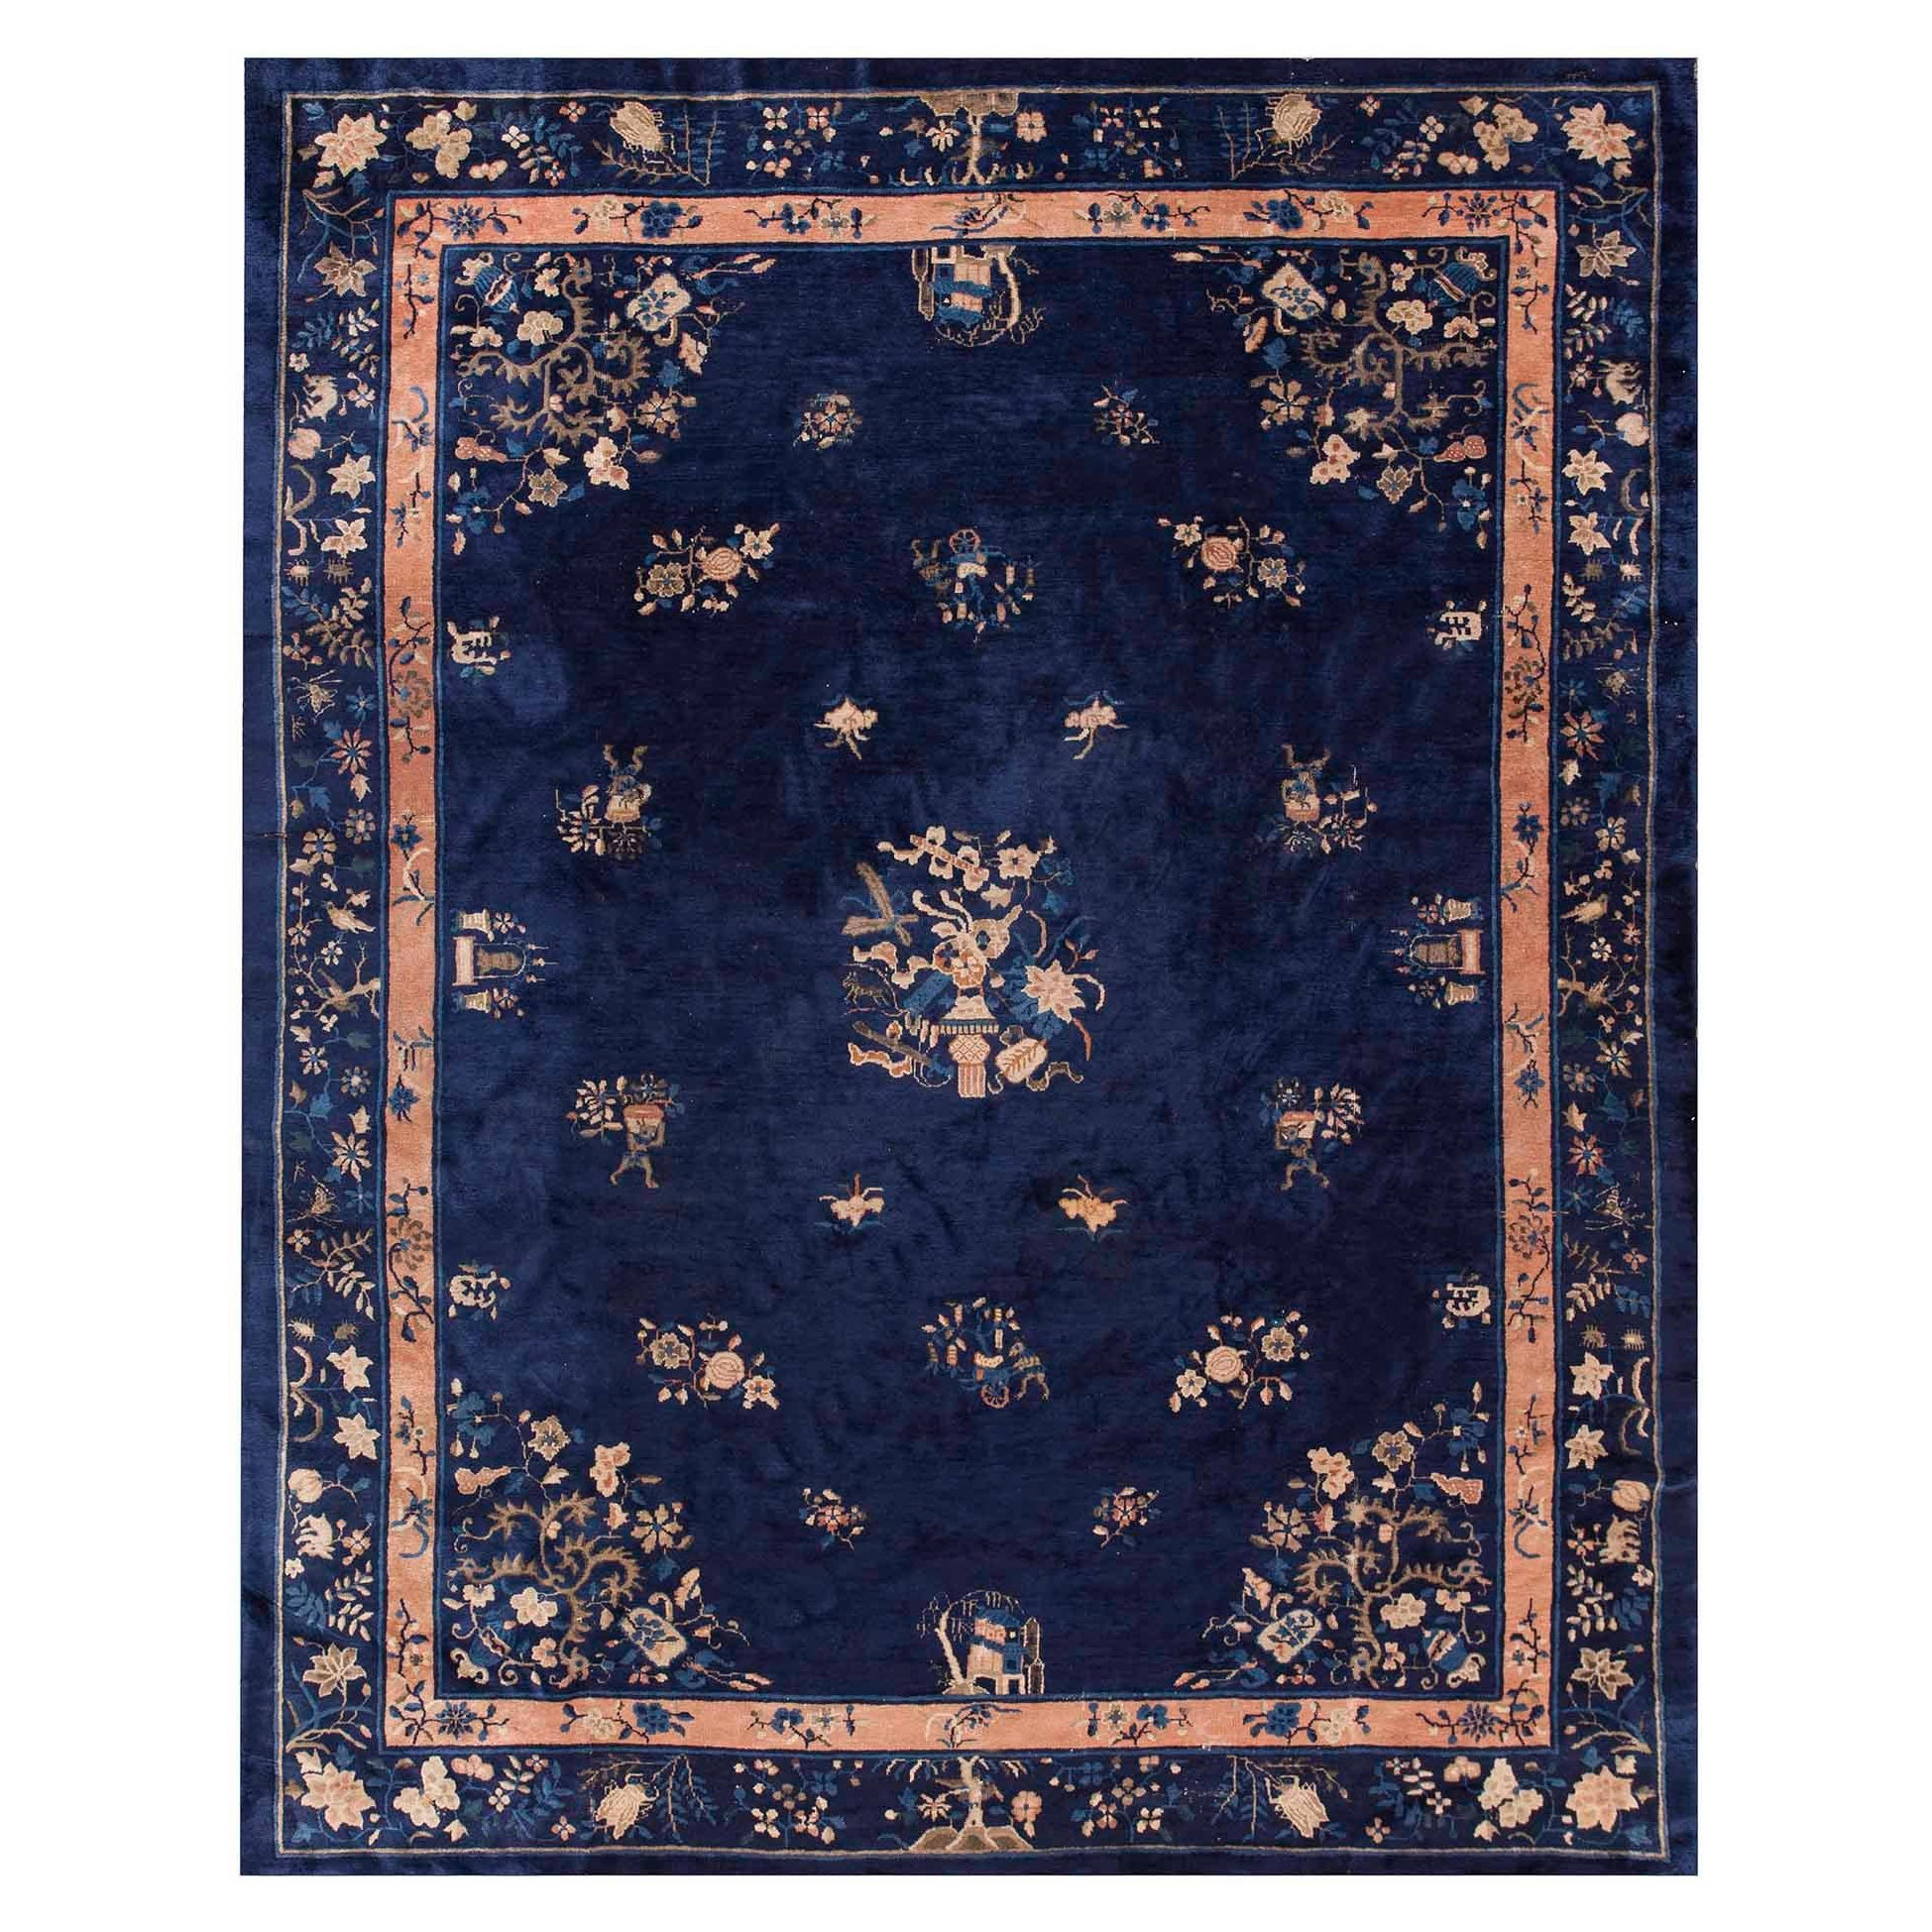 Early 20th Century Chinese Peking Carpet ( 9'2" x 11'6" - 280 x 350 )